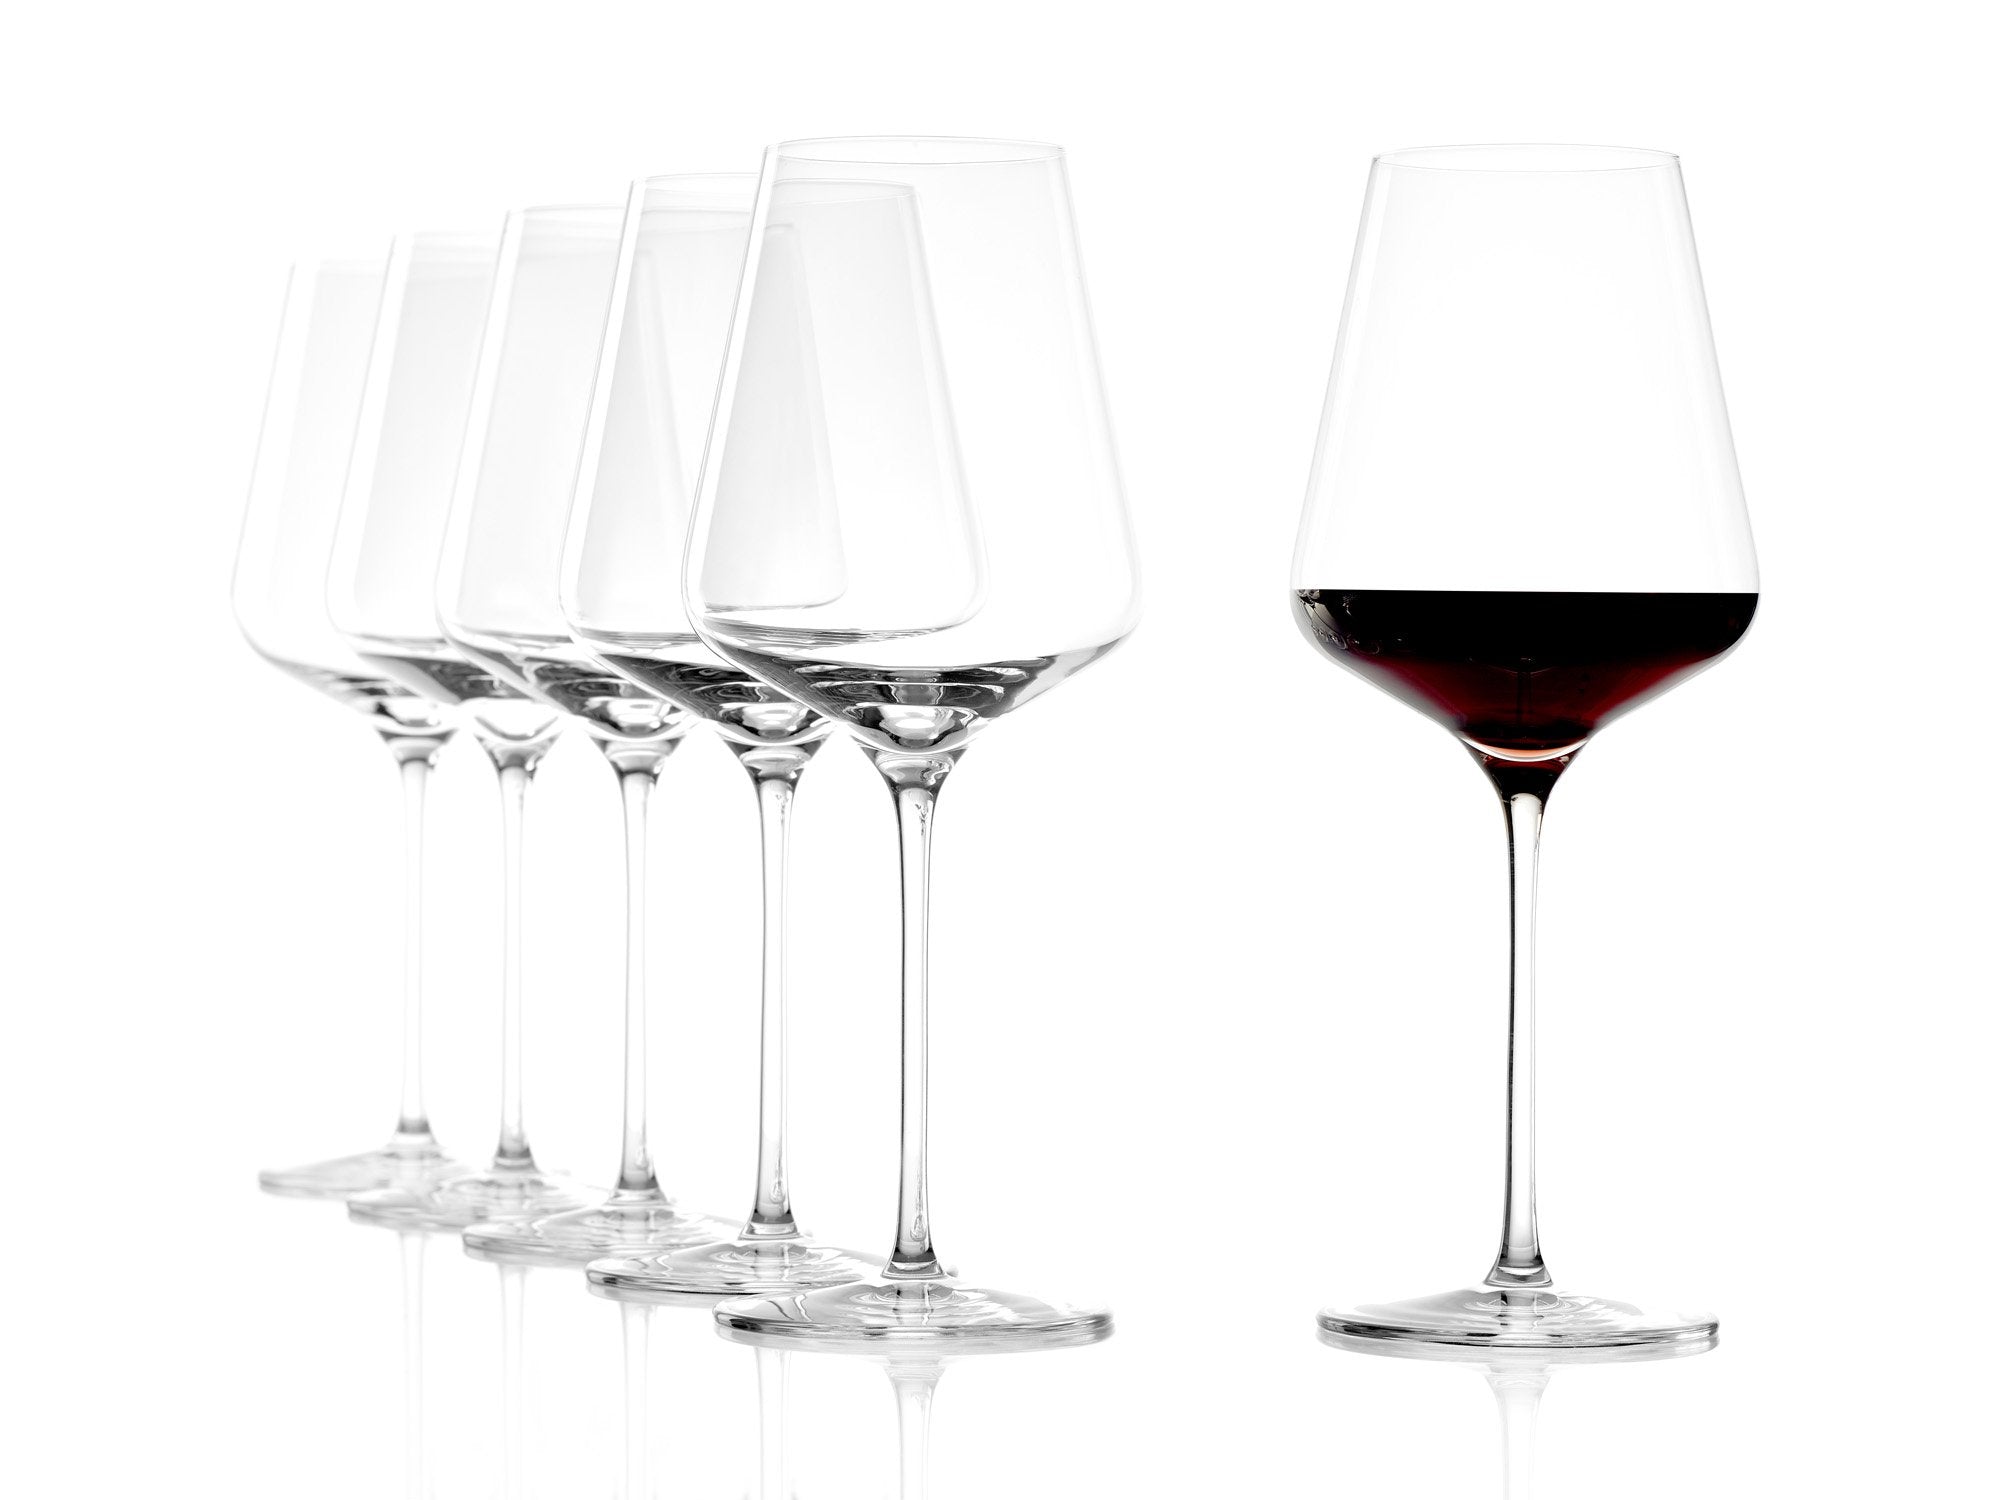 Stoelzle Quatrophil Bordeaux Red Wine Glass Lead Free Crystal